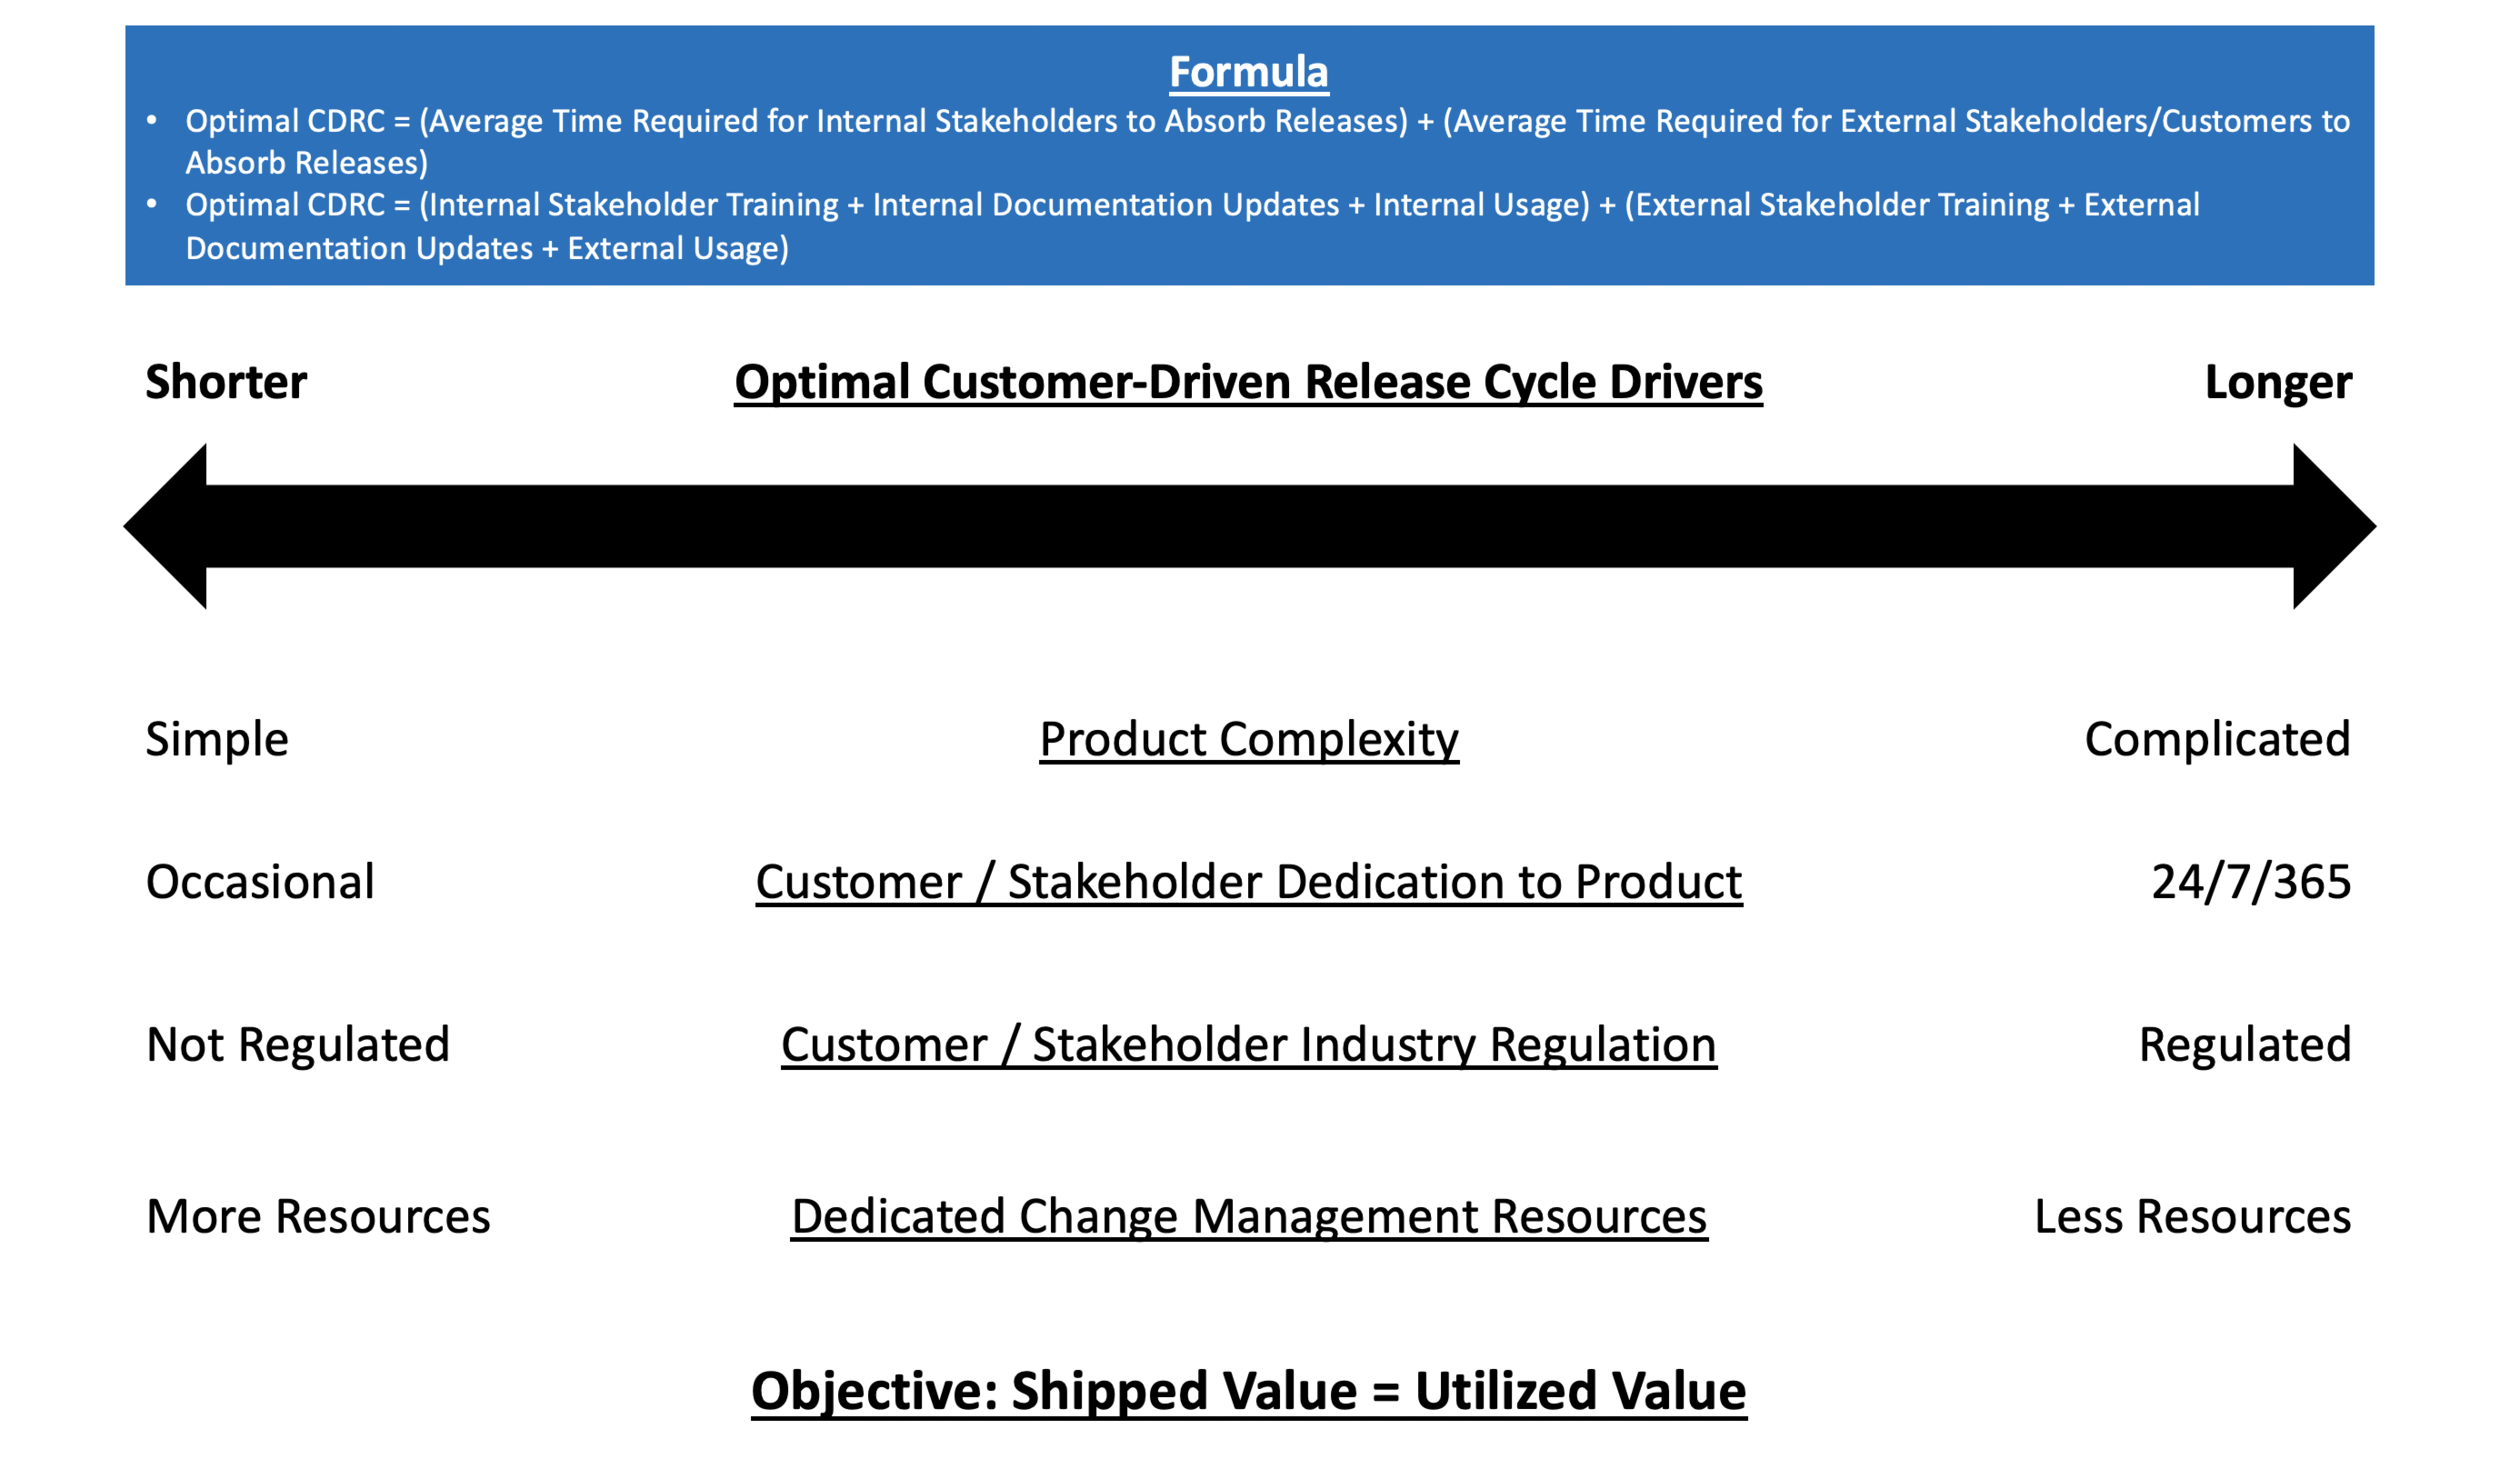 Optimal Customer-Driven Release Formula